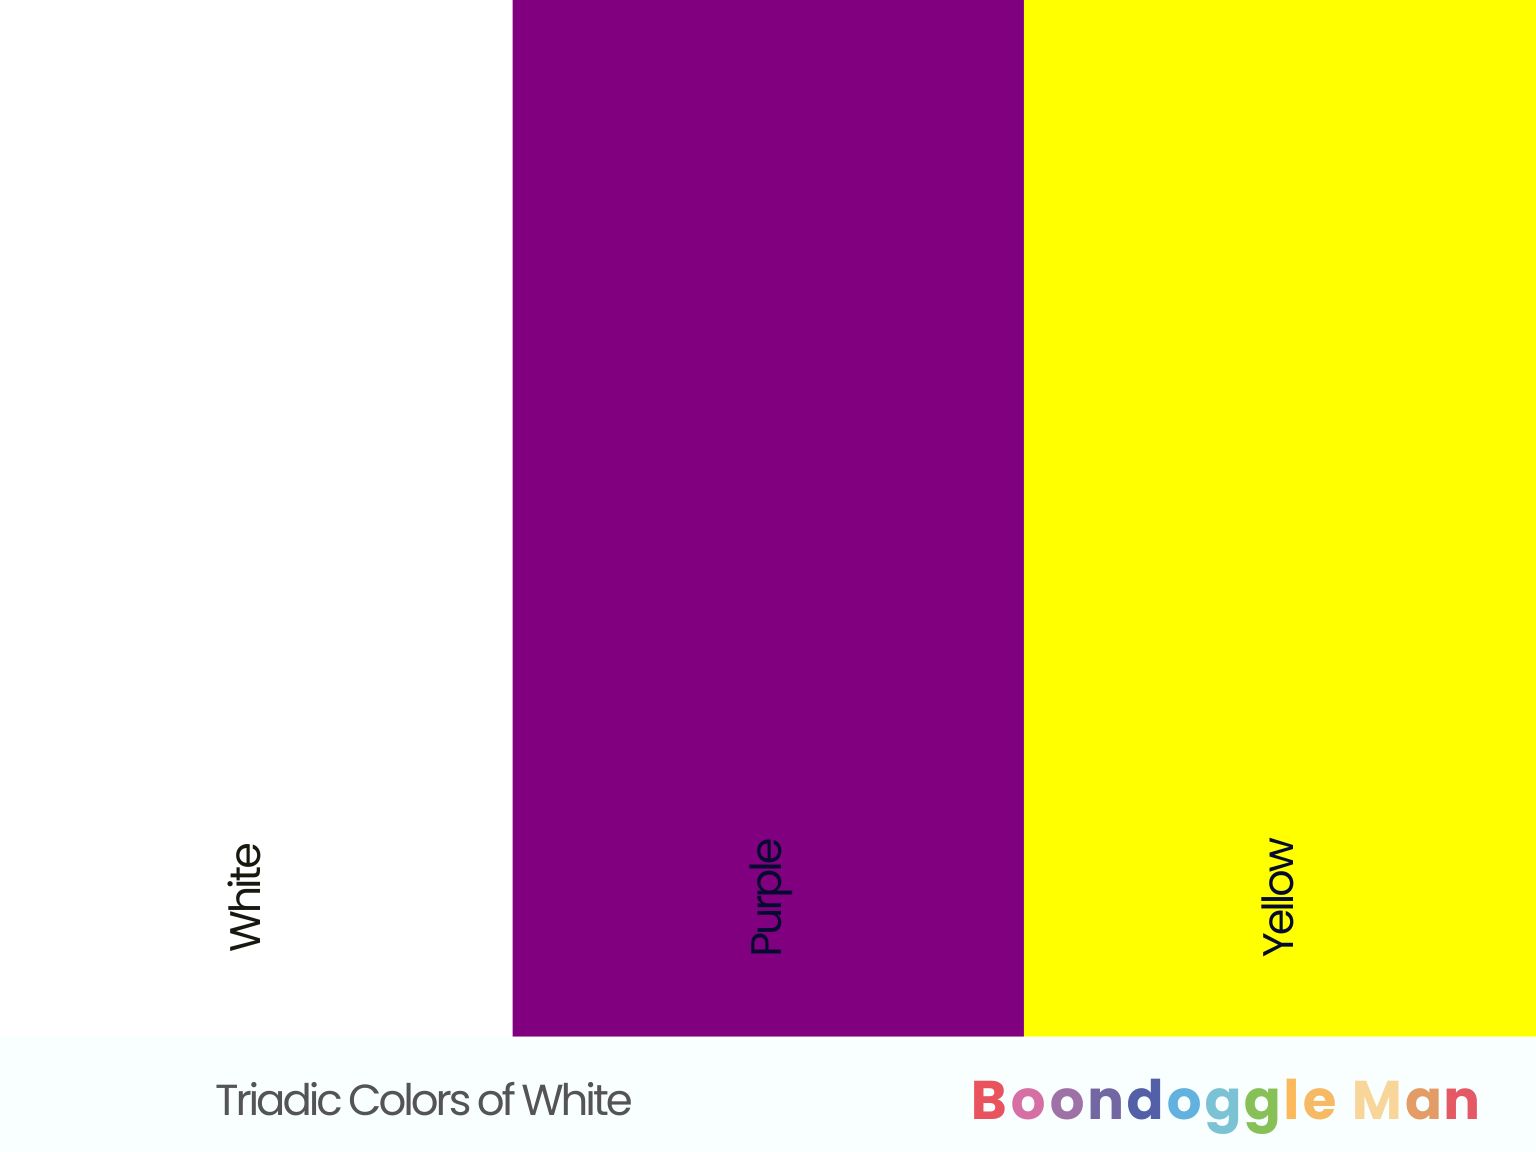 Triadic Colors of White